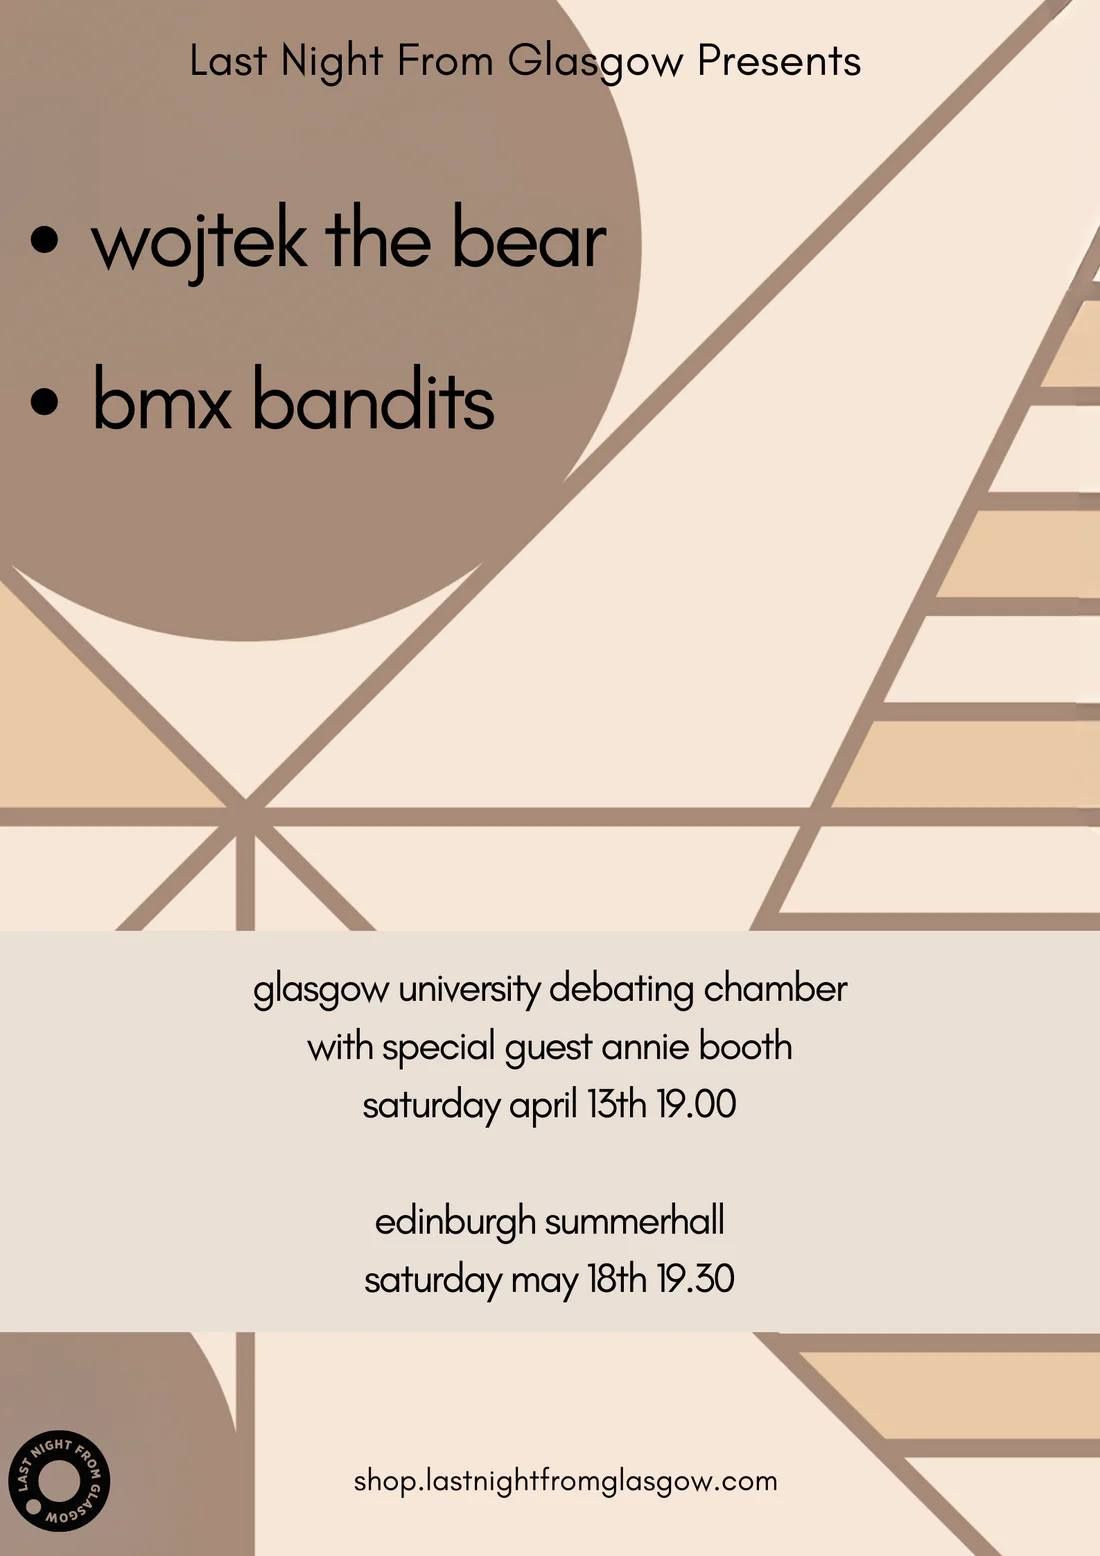 BMX Bandits & wojtek the bear at Summerhall, Edinburgh